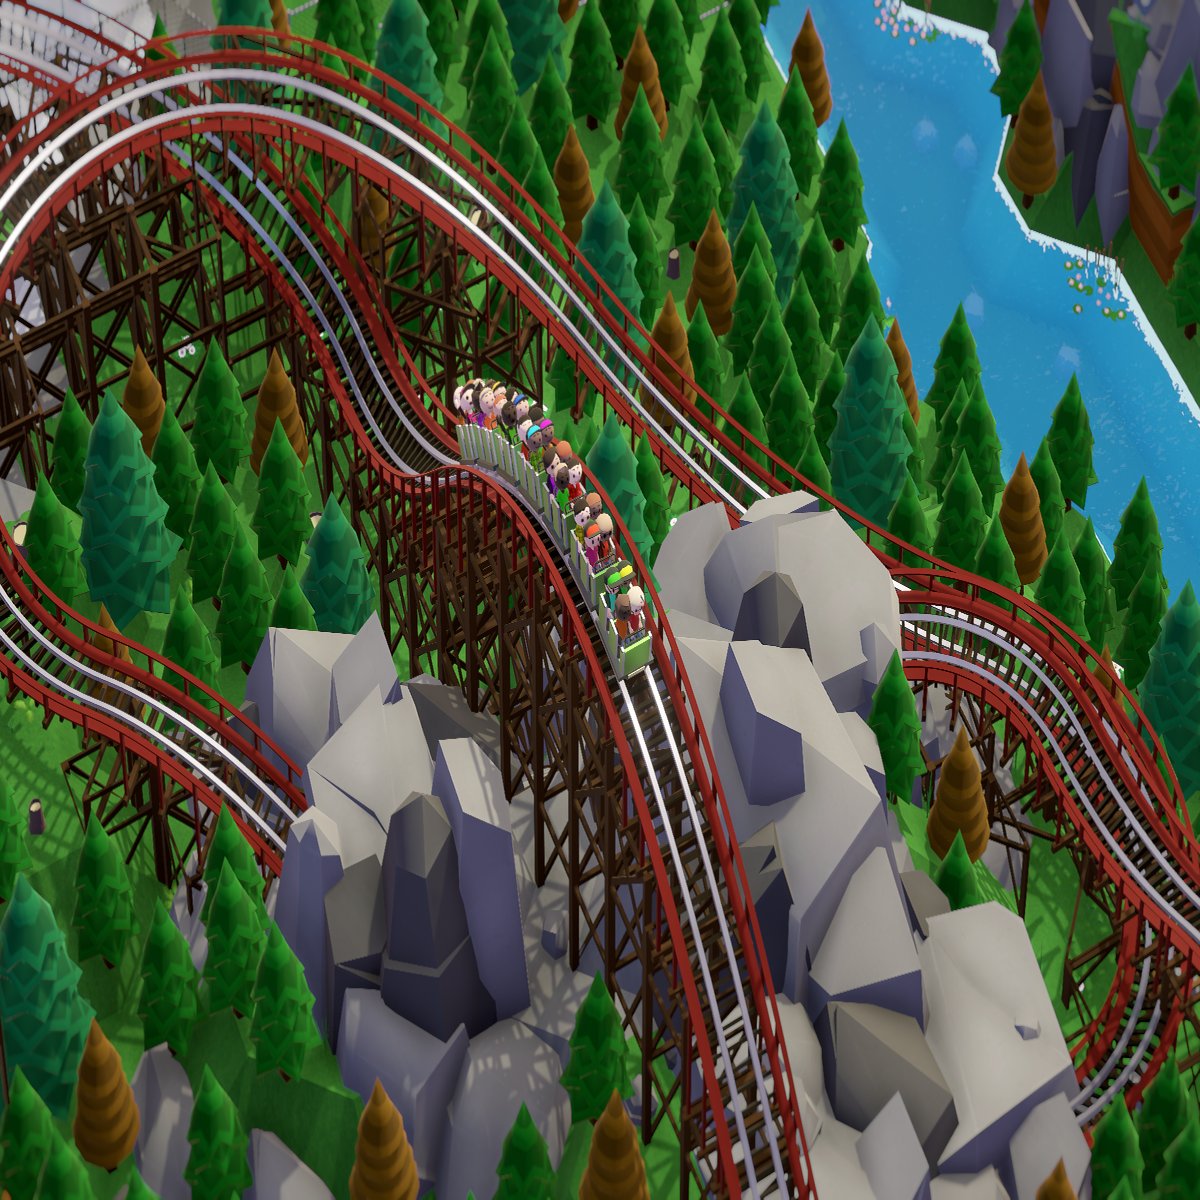 My favorite RollerCoaster Tycoon 3 coasters